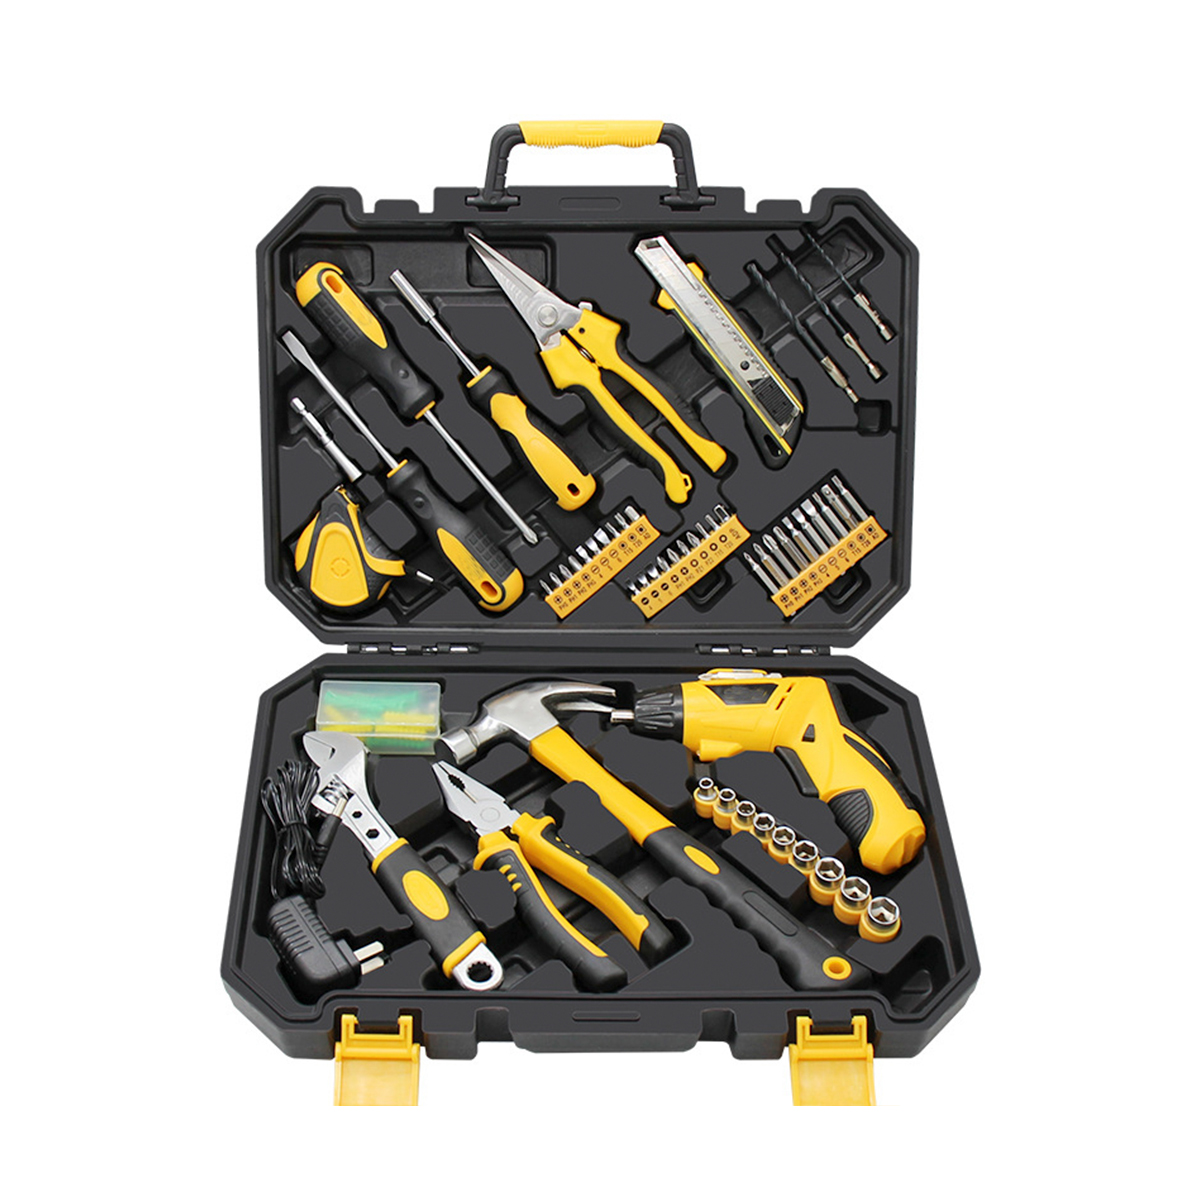 95pcs Combination Hand Tools Box Set Home Household Hand Tool Kit